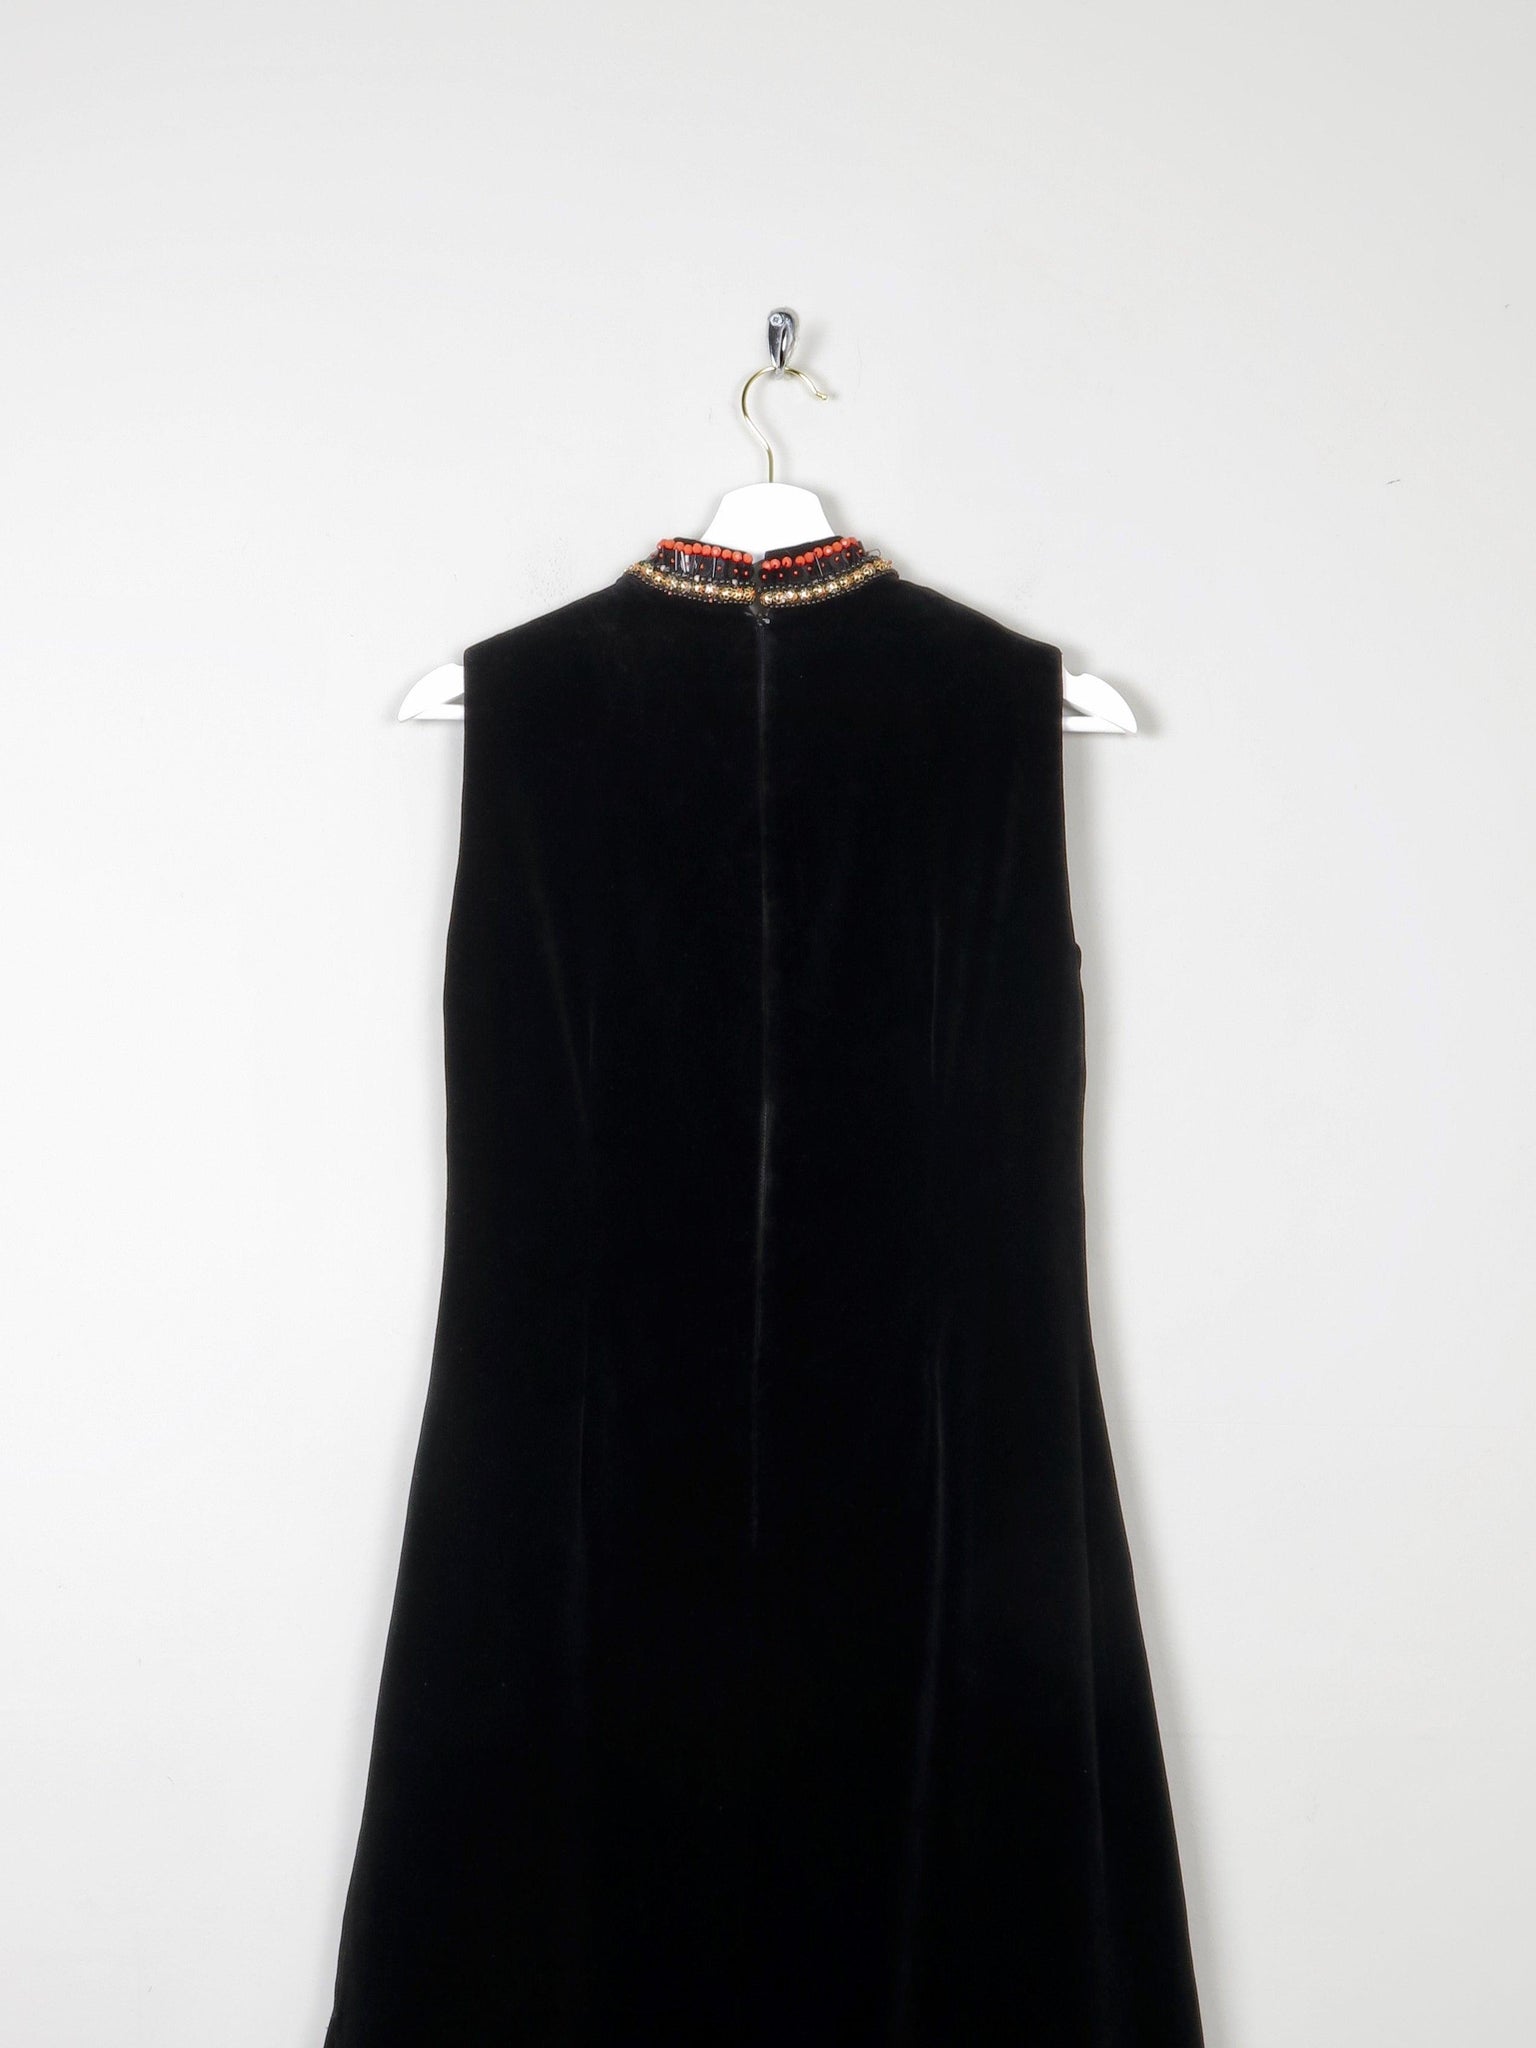 Black Velvet 1960s/70s Maxi Dress With Keyhole Beading Detail 6/8 XS - The Harlequin